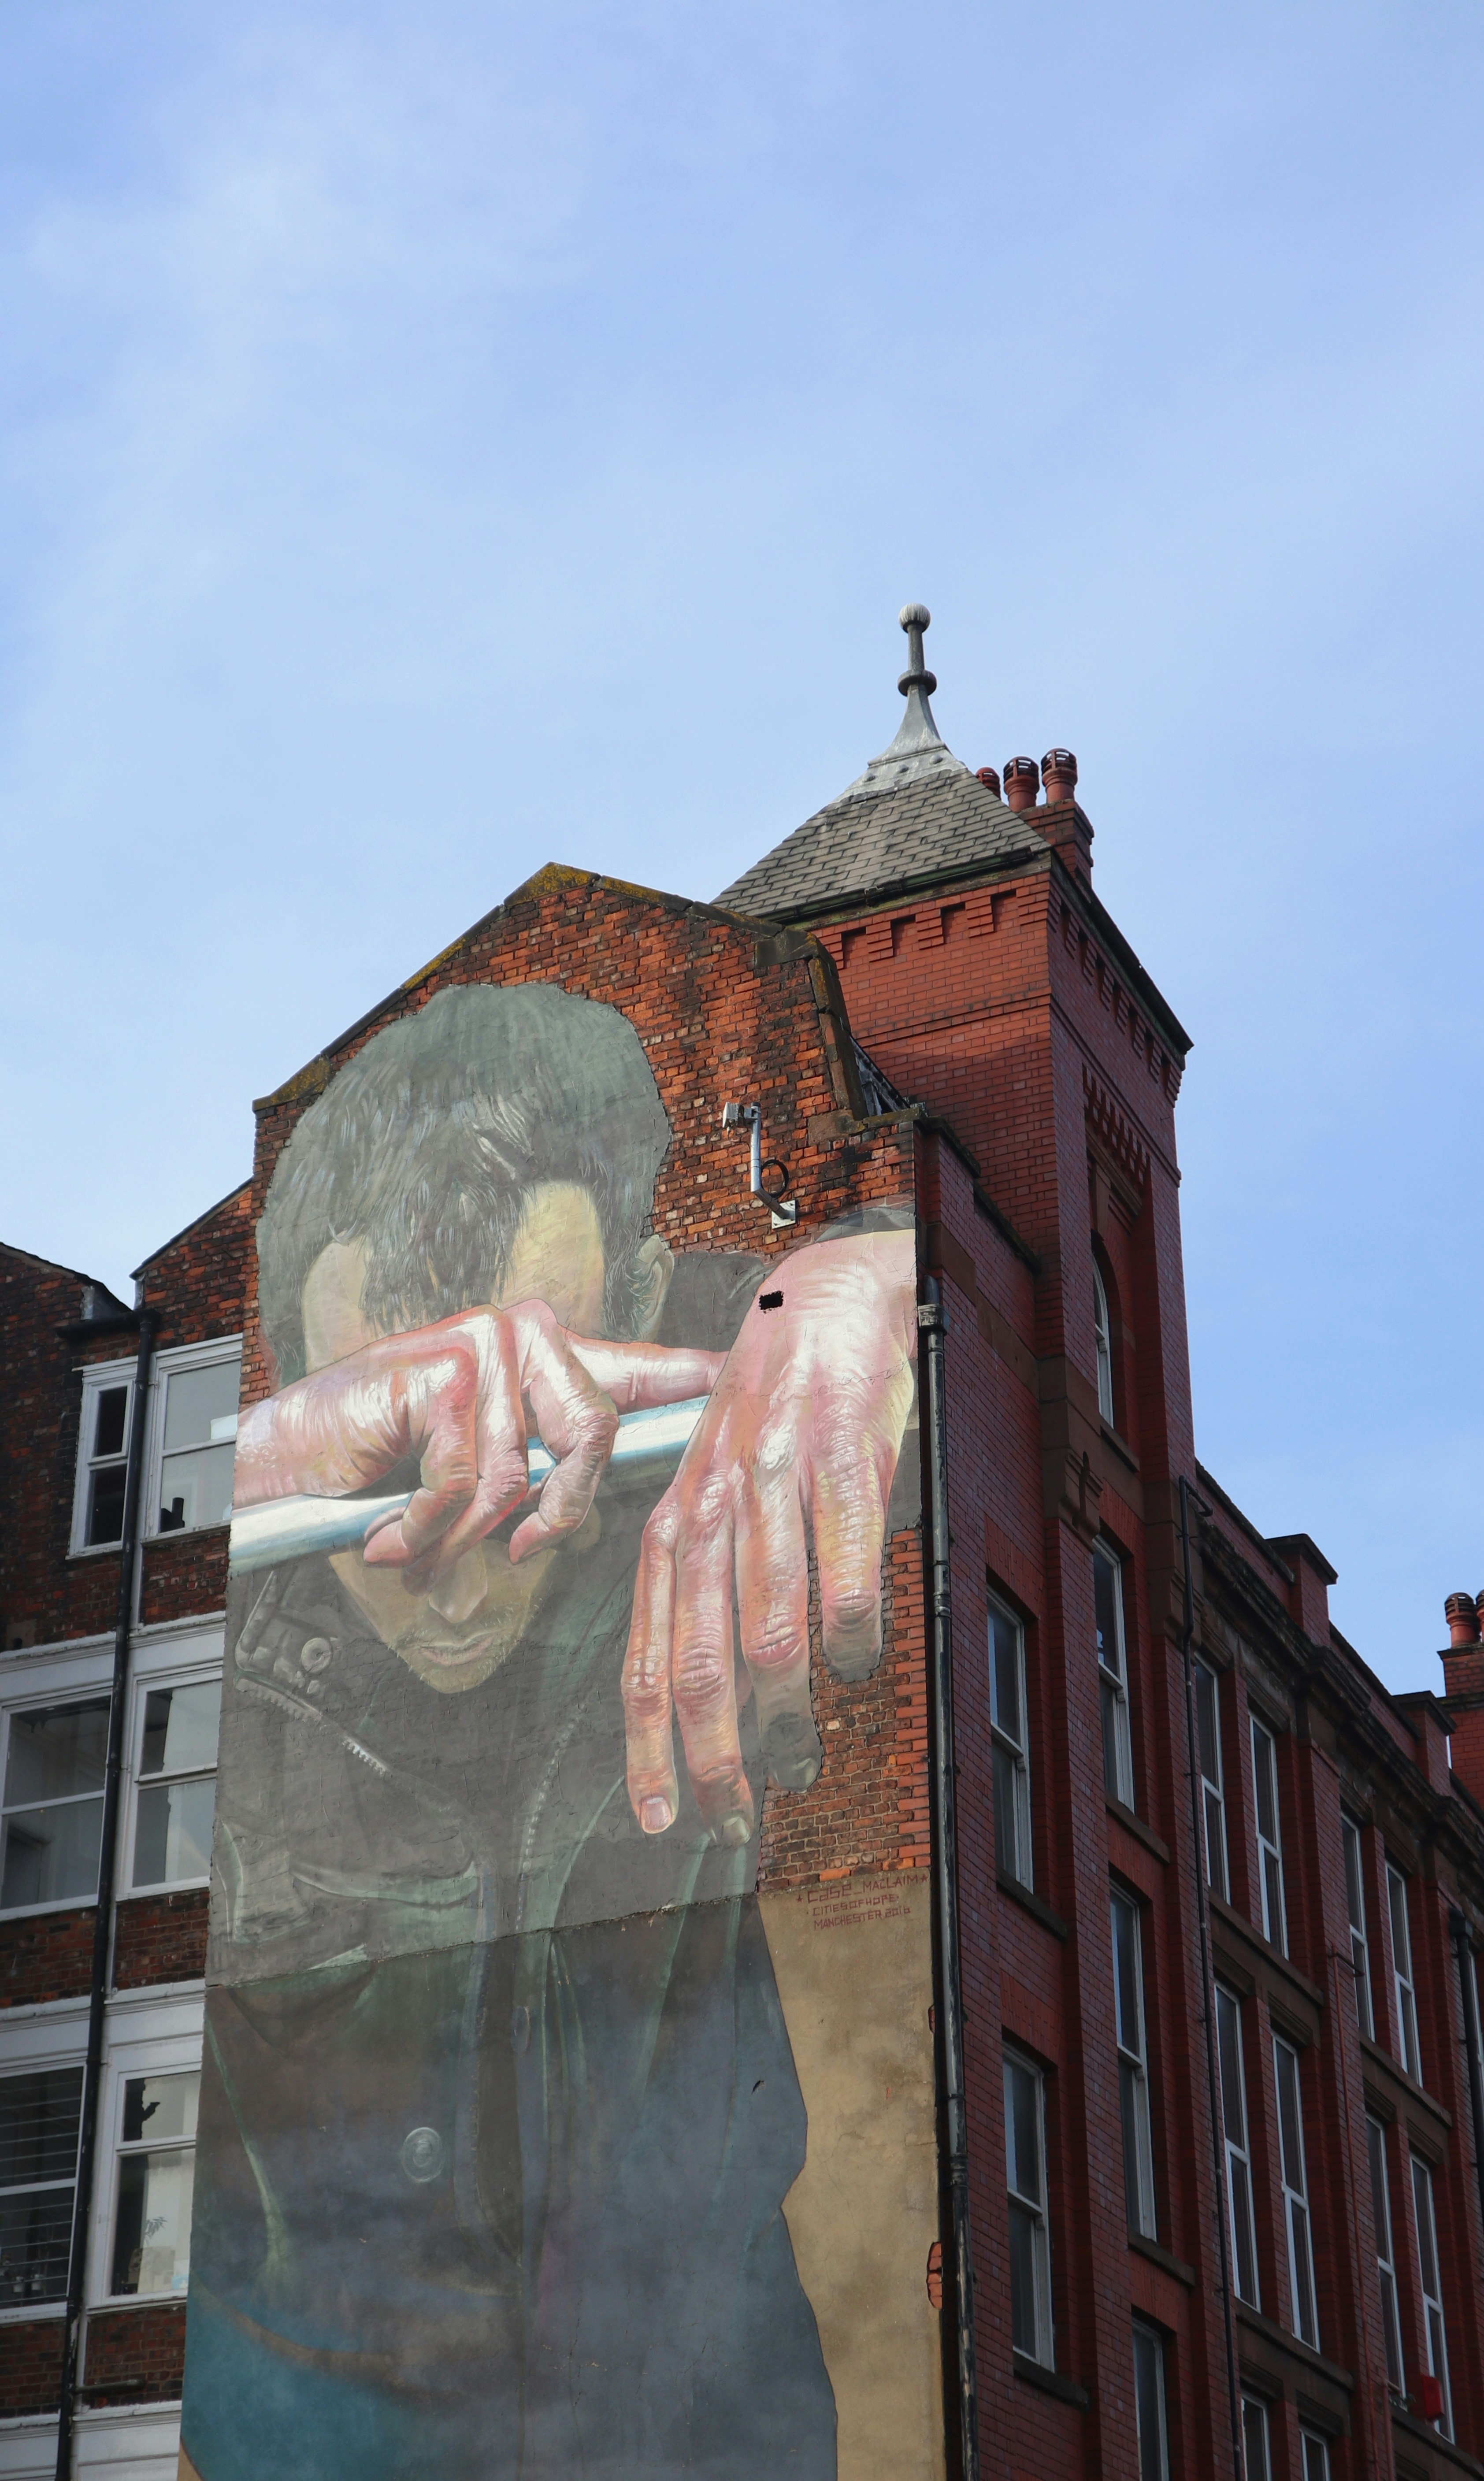 Giant street art mural, built into red brickwork in Manchester's Northern Quarter.